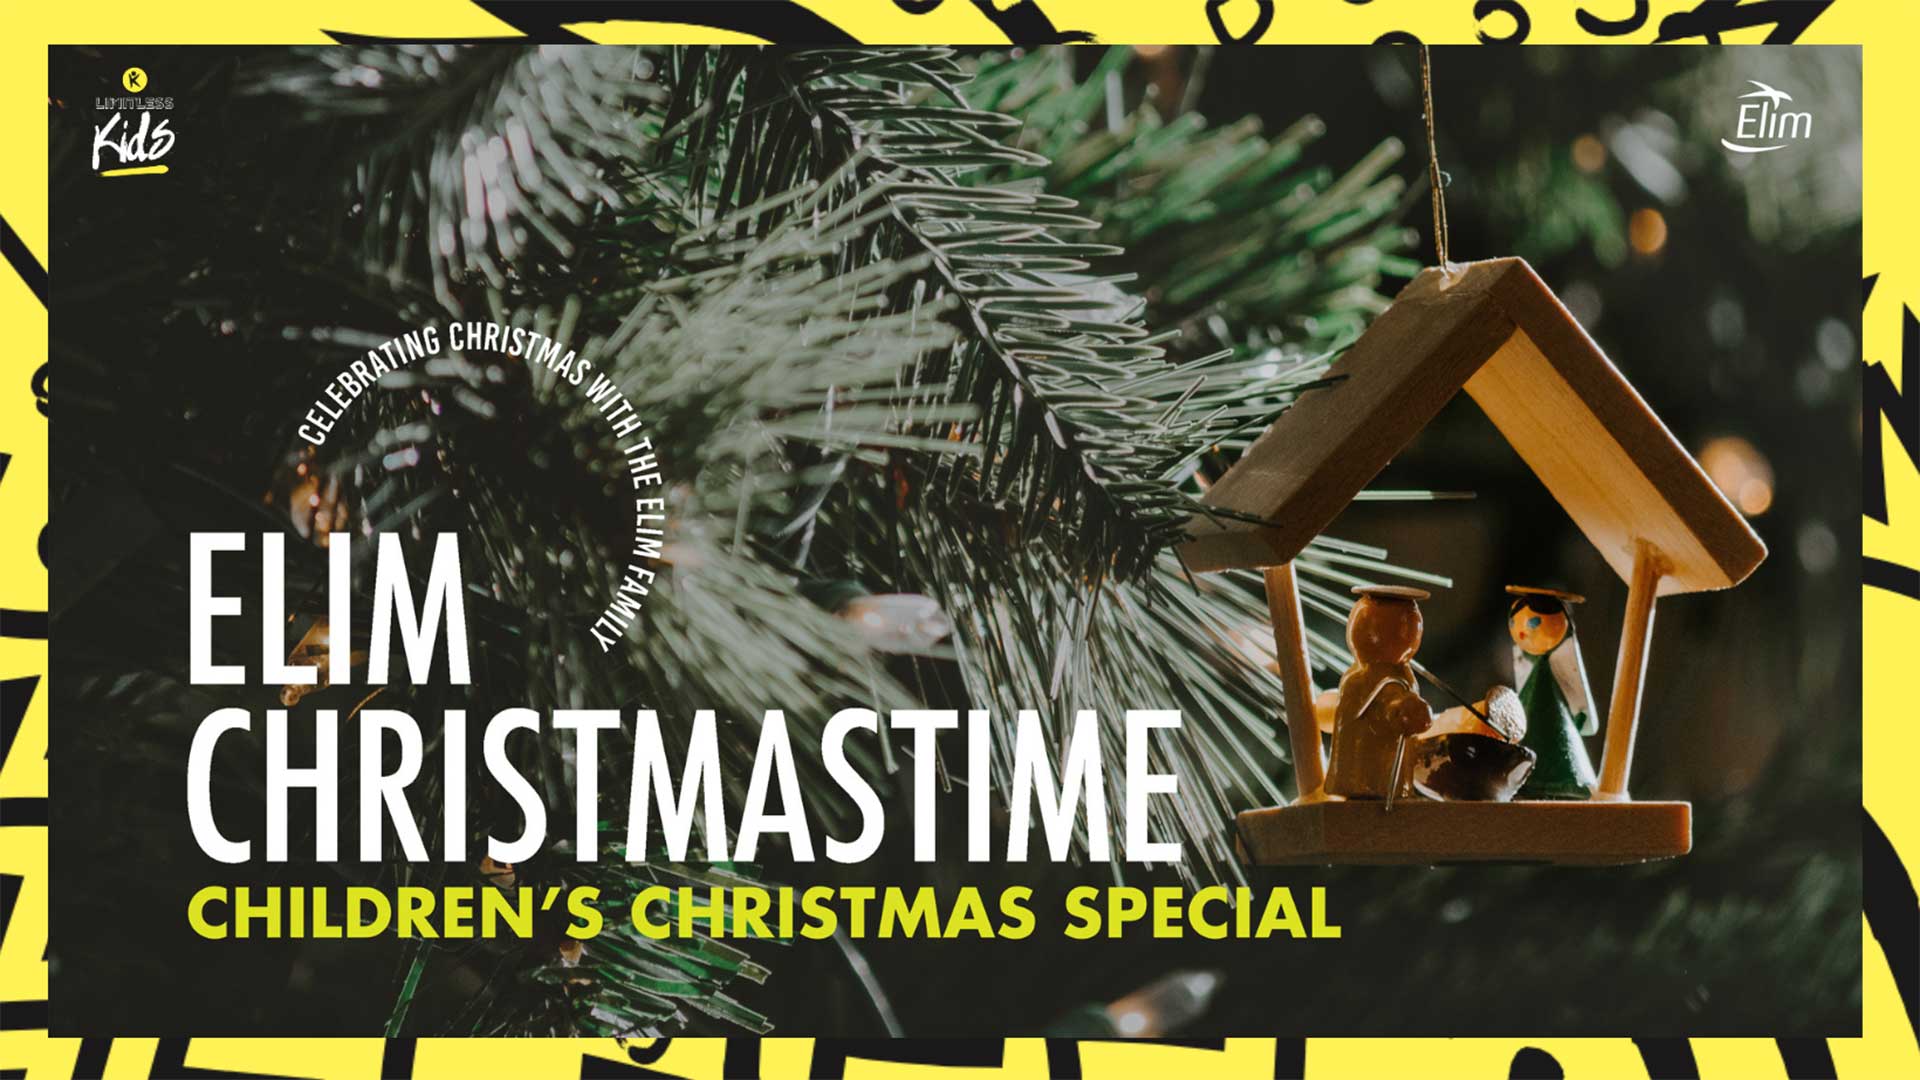 Elim-Christmastime-LimitlessKi